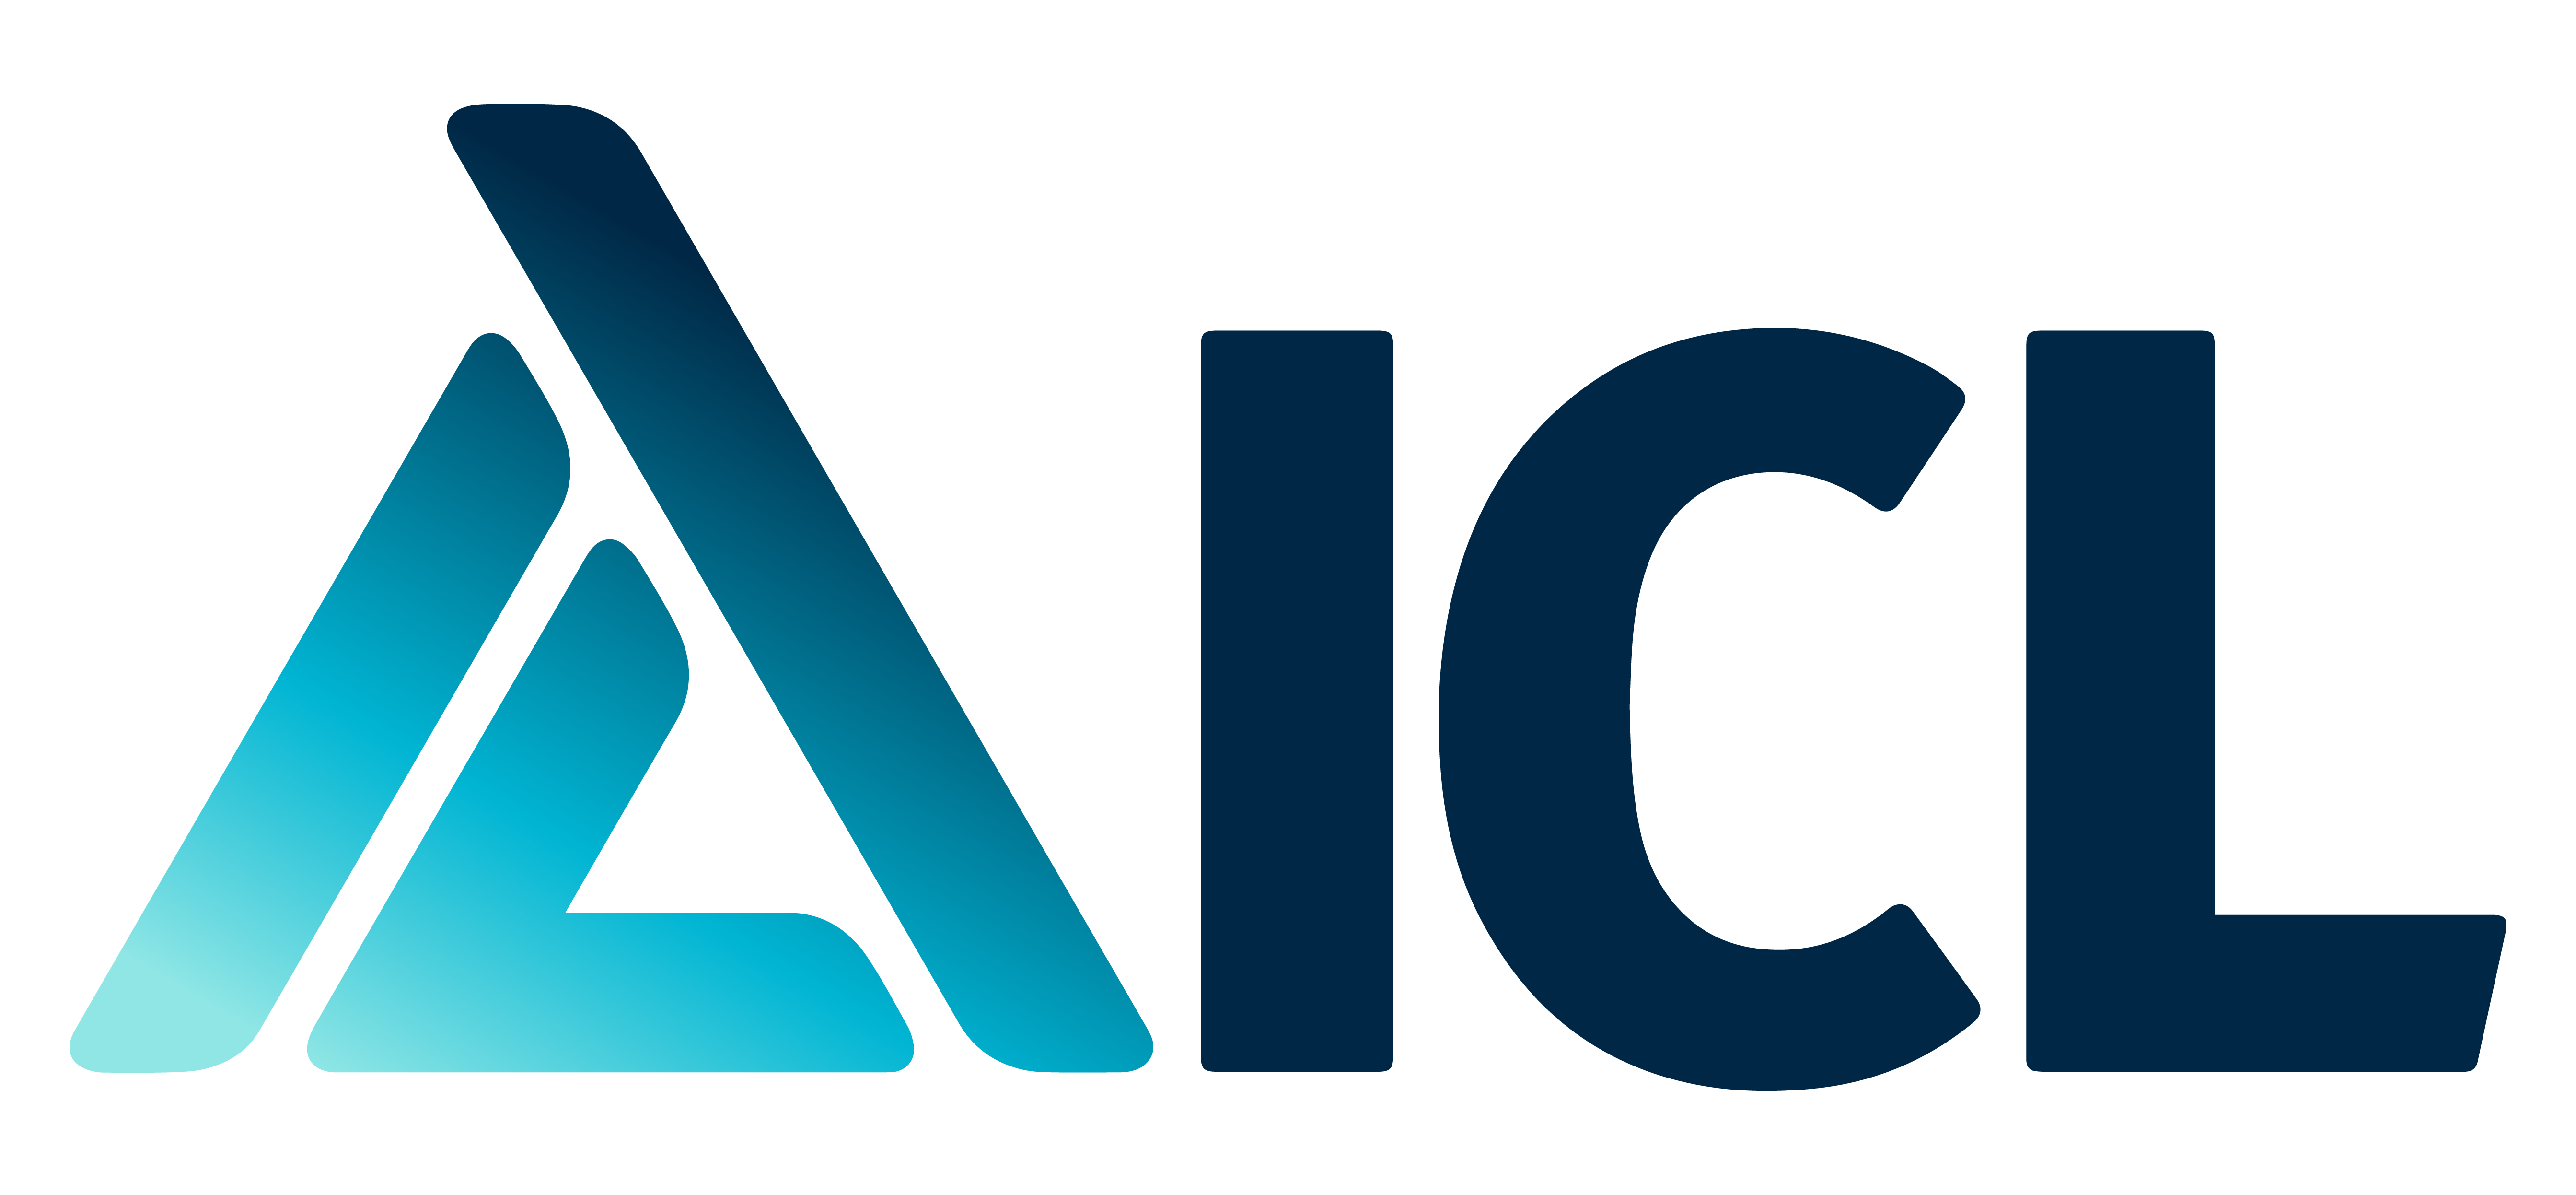 icl logo